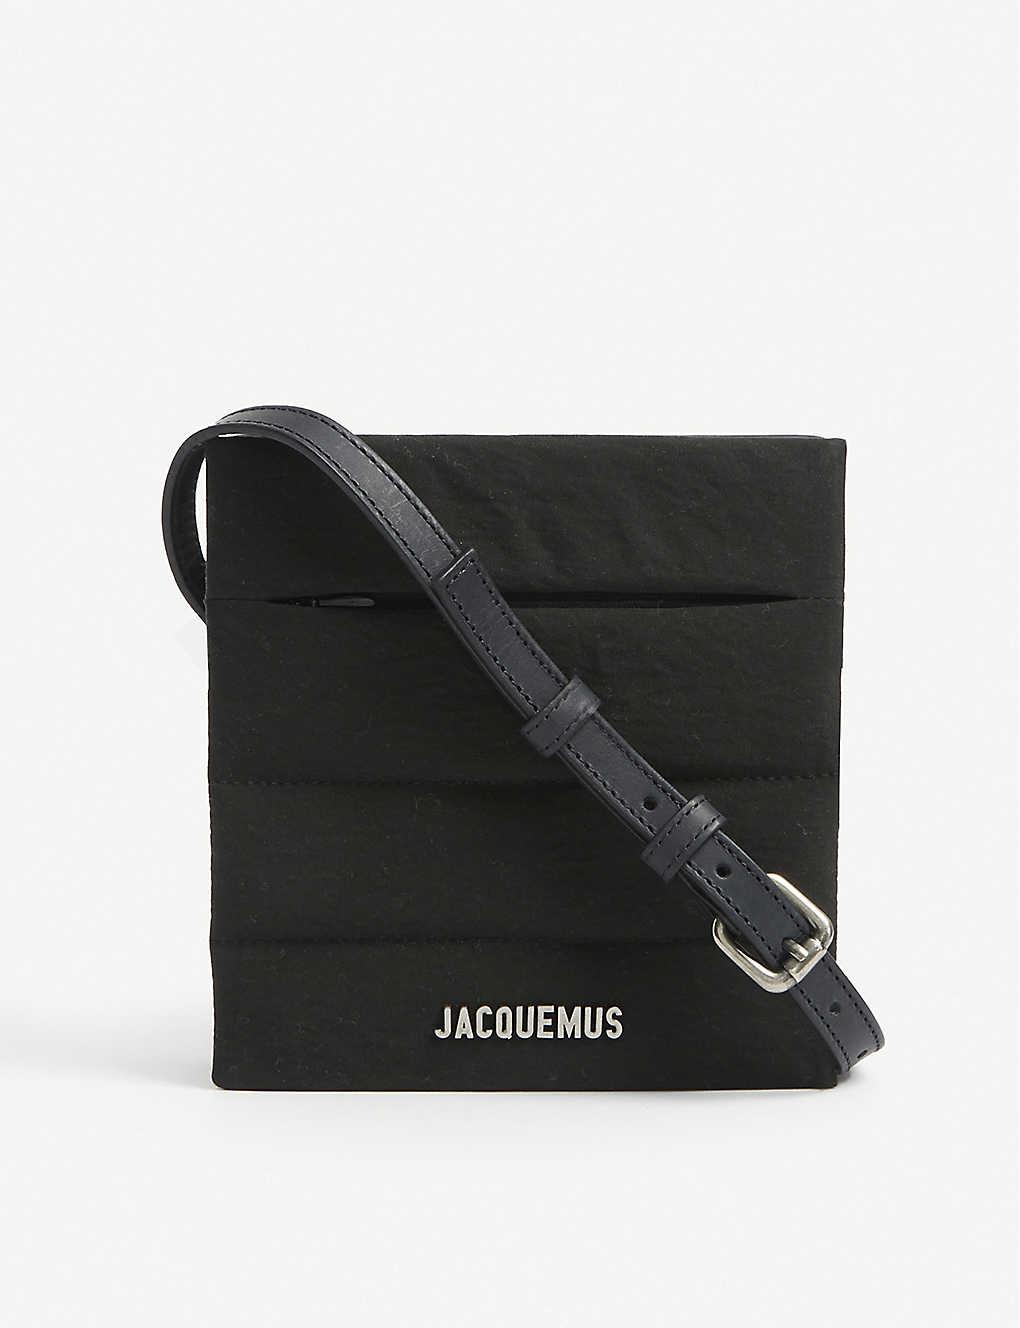 Jacquemus Le Carre Leather Cross-body Bag in Black for Men | Lyst Australia